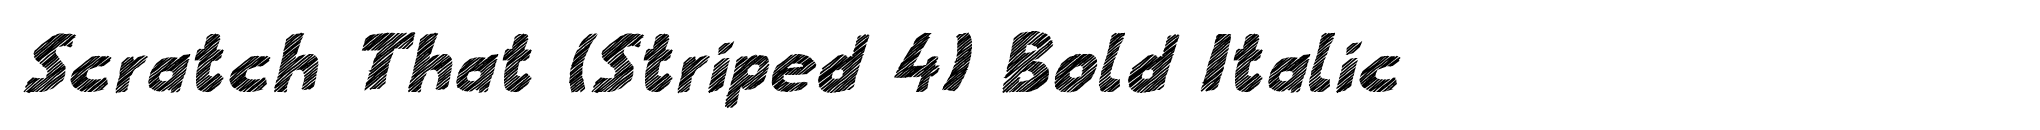 Scratch That (Striped 4) Bold Italic image